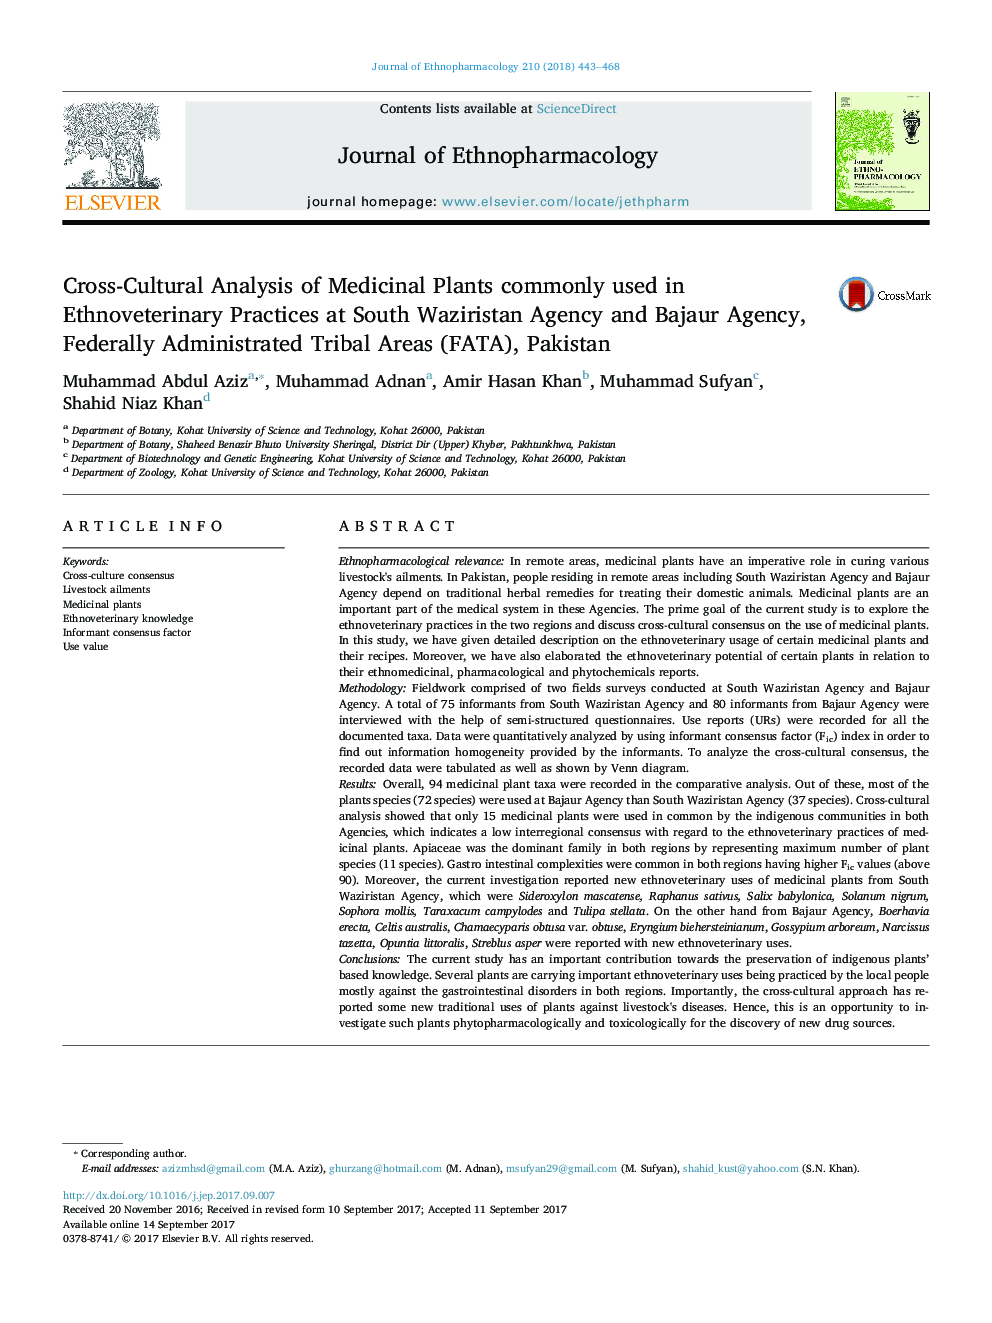 CrossâCultural Analysis of Medicinal Plants commonly used in Ethnoveterinary Practices at South Waziristan Agency and Bajaur Agency, Federally Administrated Tribal Areas (FATA), Pakistan